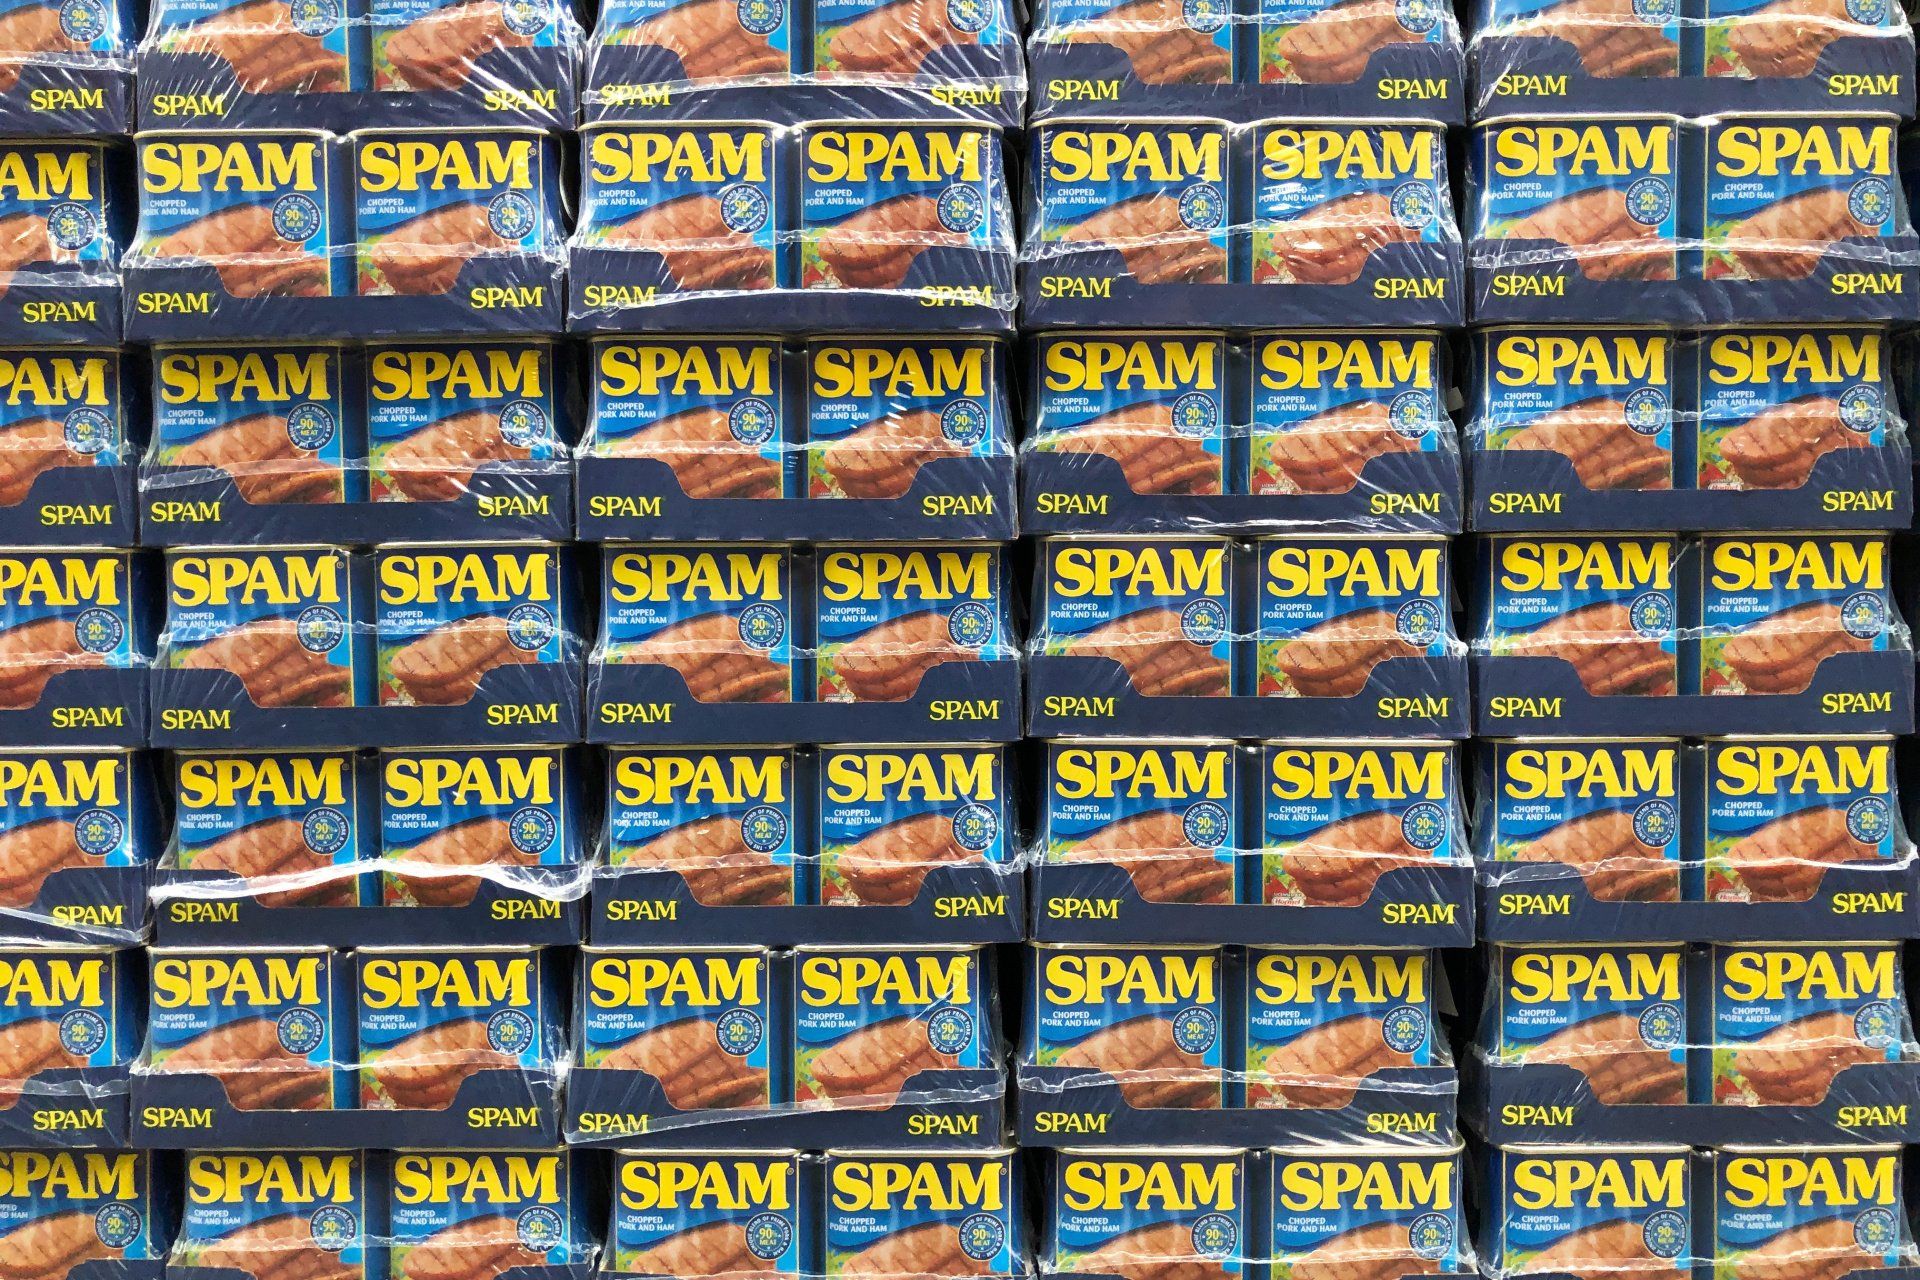 Online Strategist Email Spam